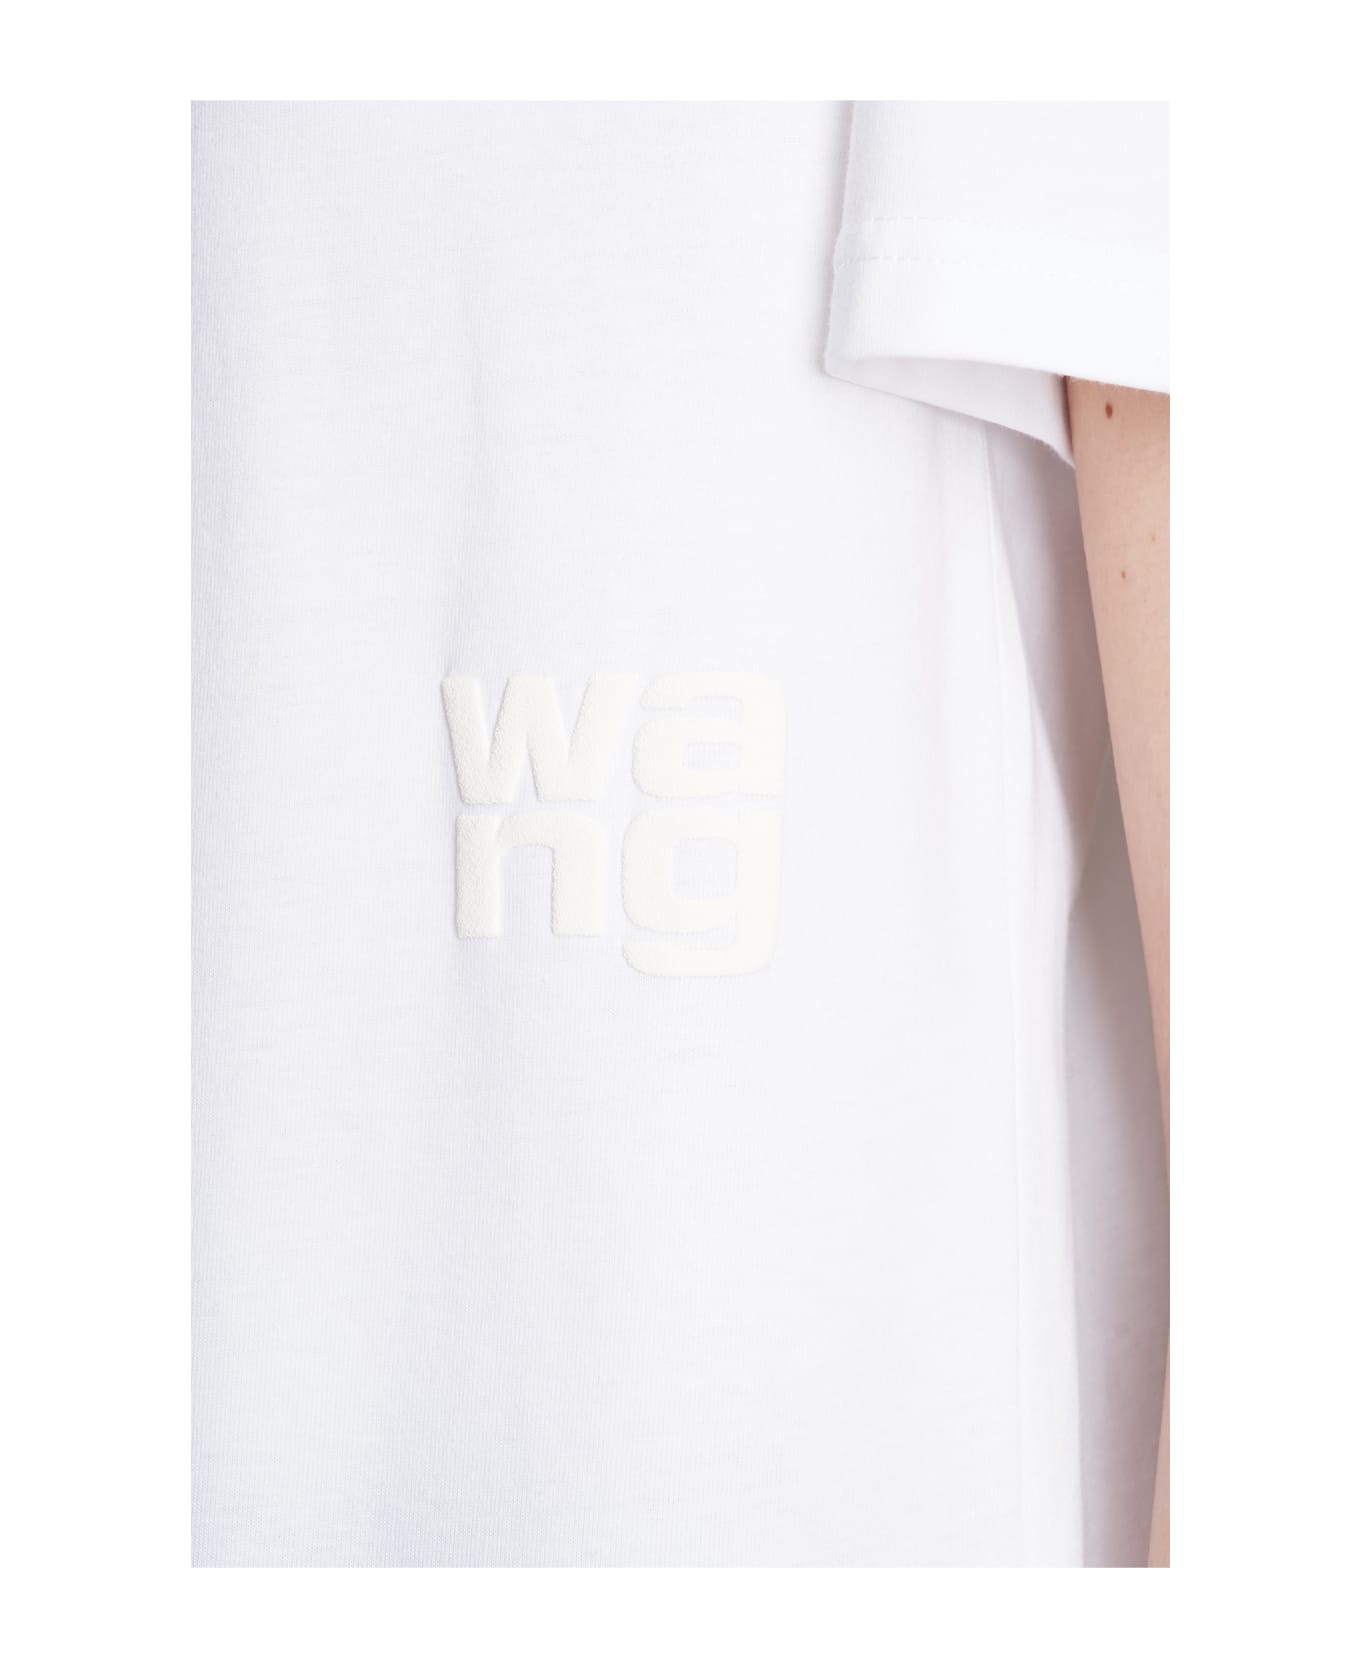 Alexander Wang T-shirt In White Cotton - 100